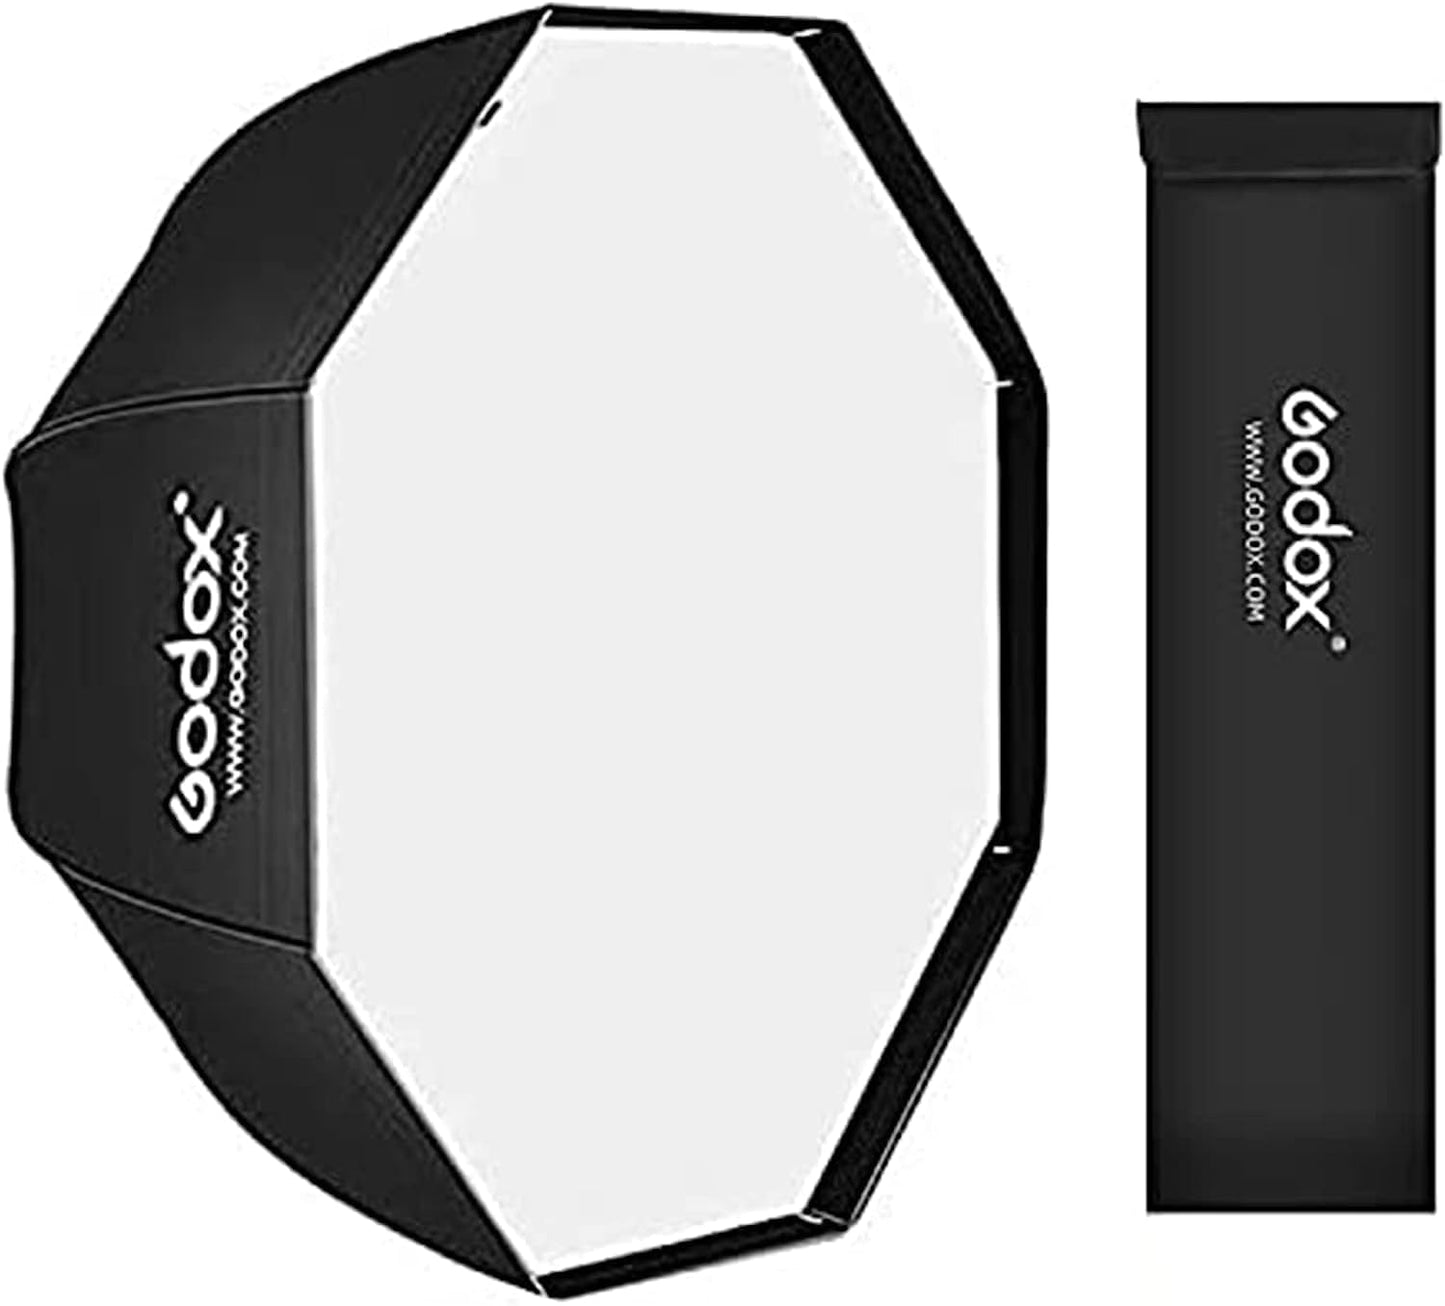 Godox Portable 95cm/37.5" Umbrella Octagon Softbox Reflector with Carrying Bag for Studio Photo Flash Speedlight